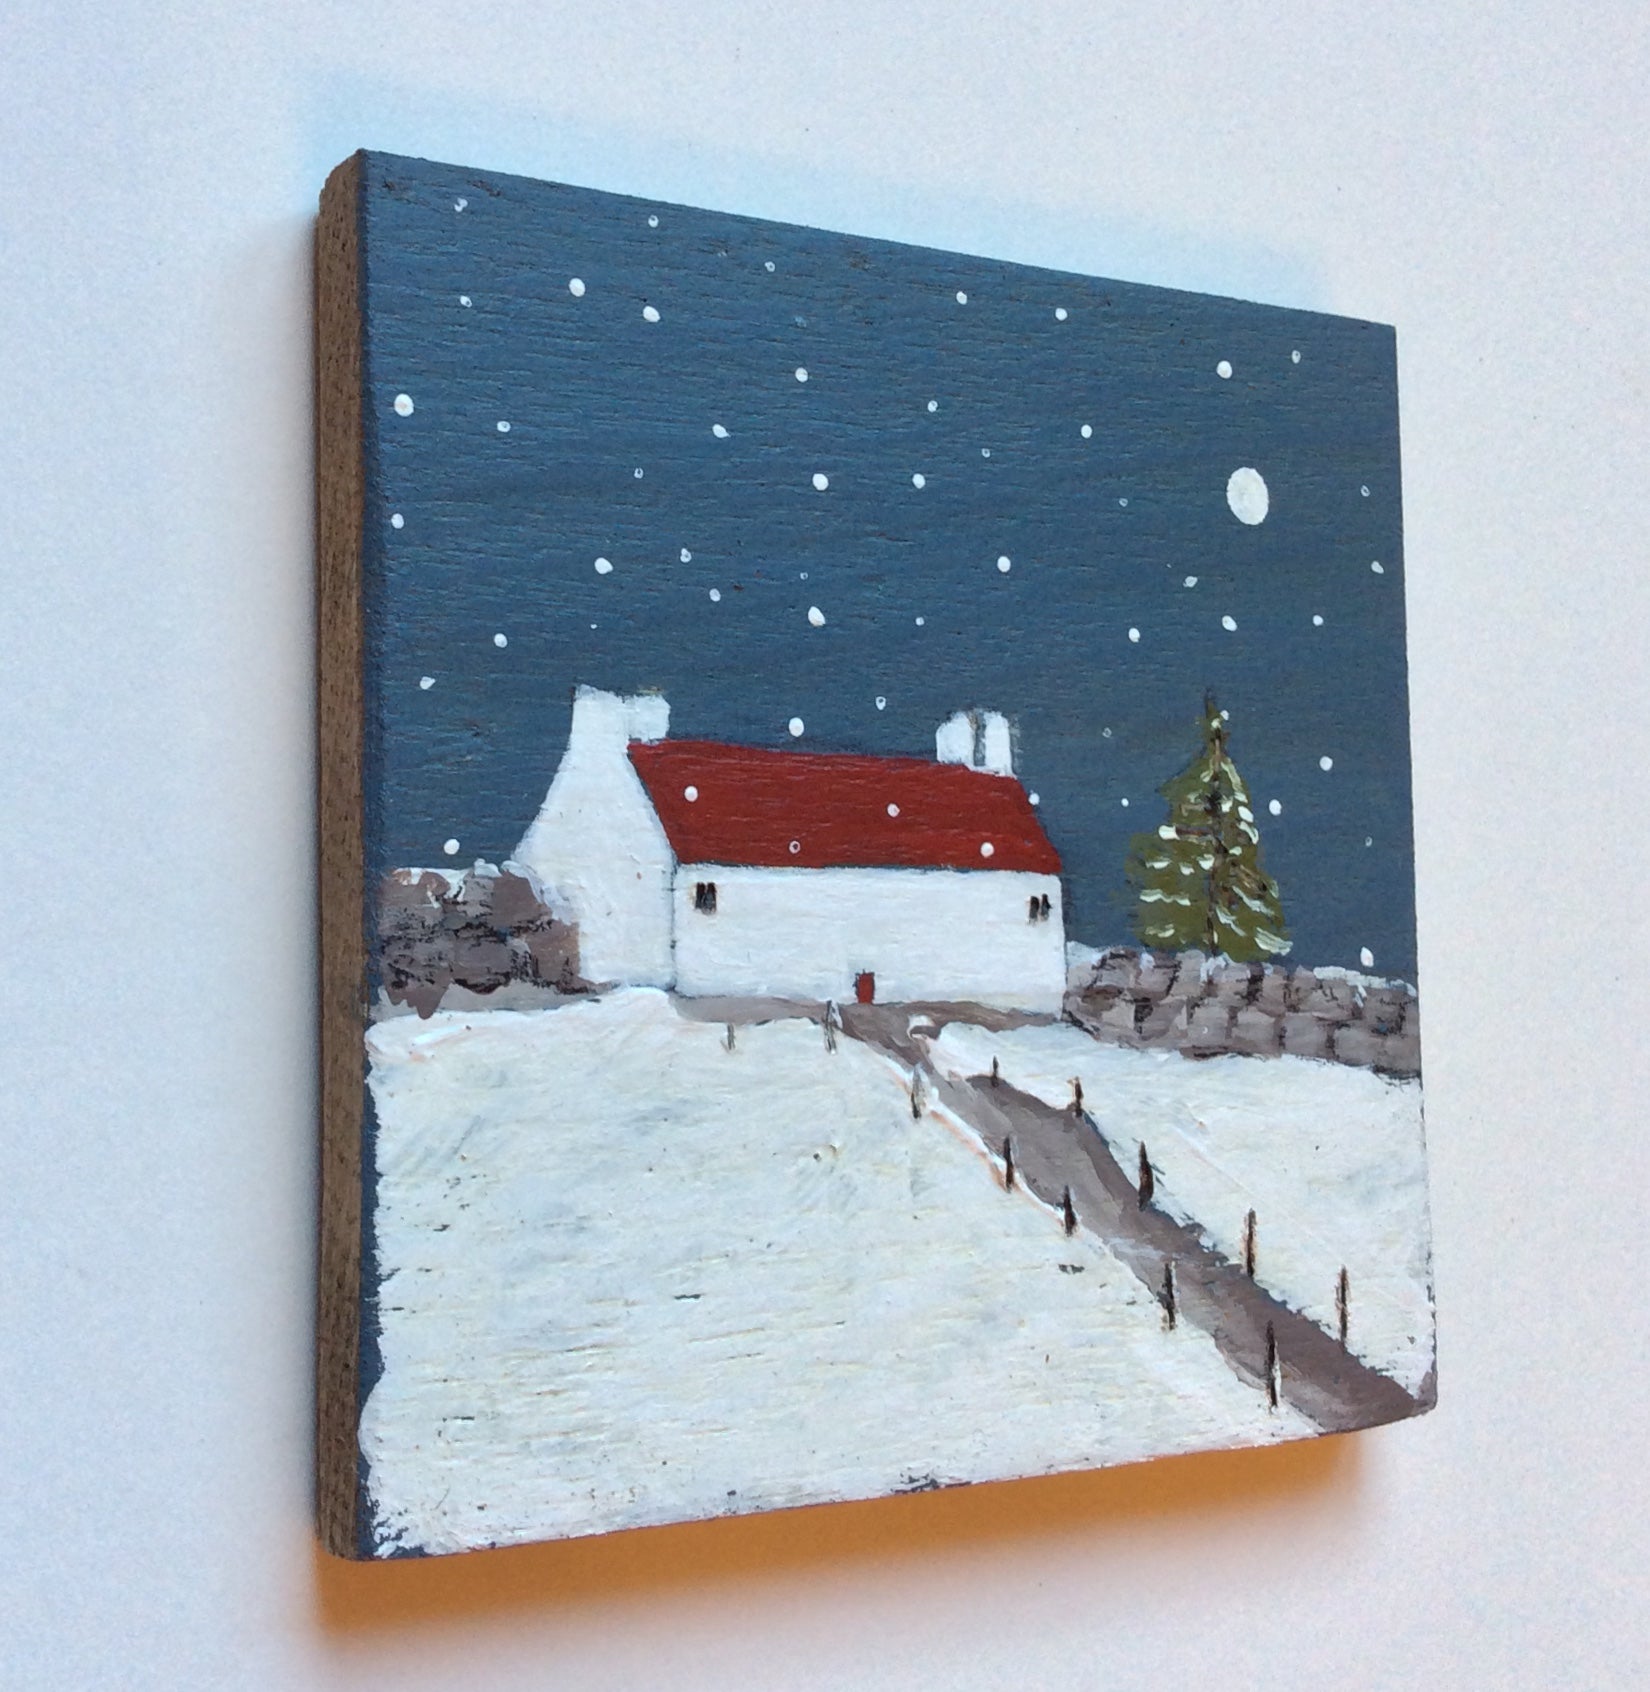 Mixed Media Art on wood By Louise O'Hara - "Evening snowfall”